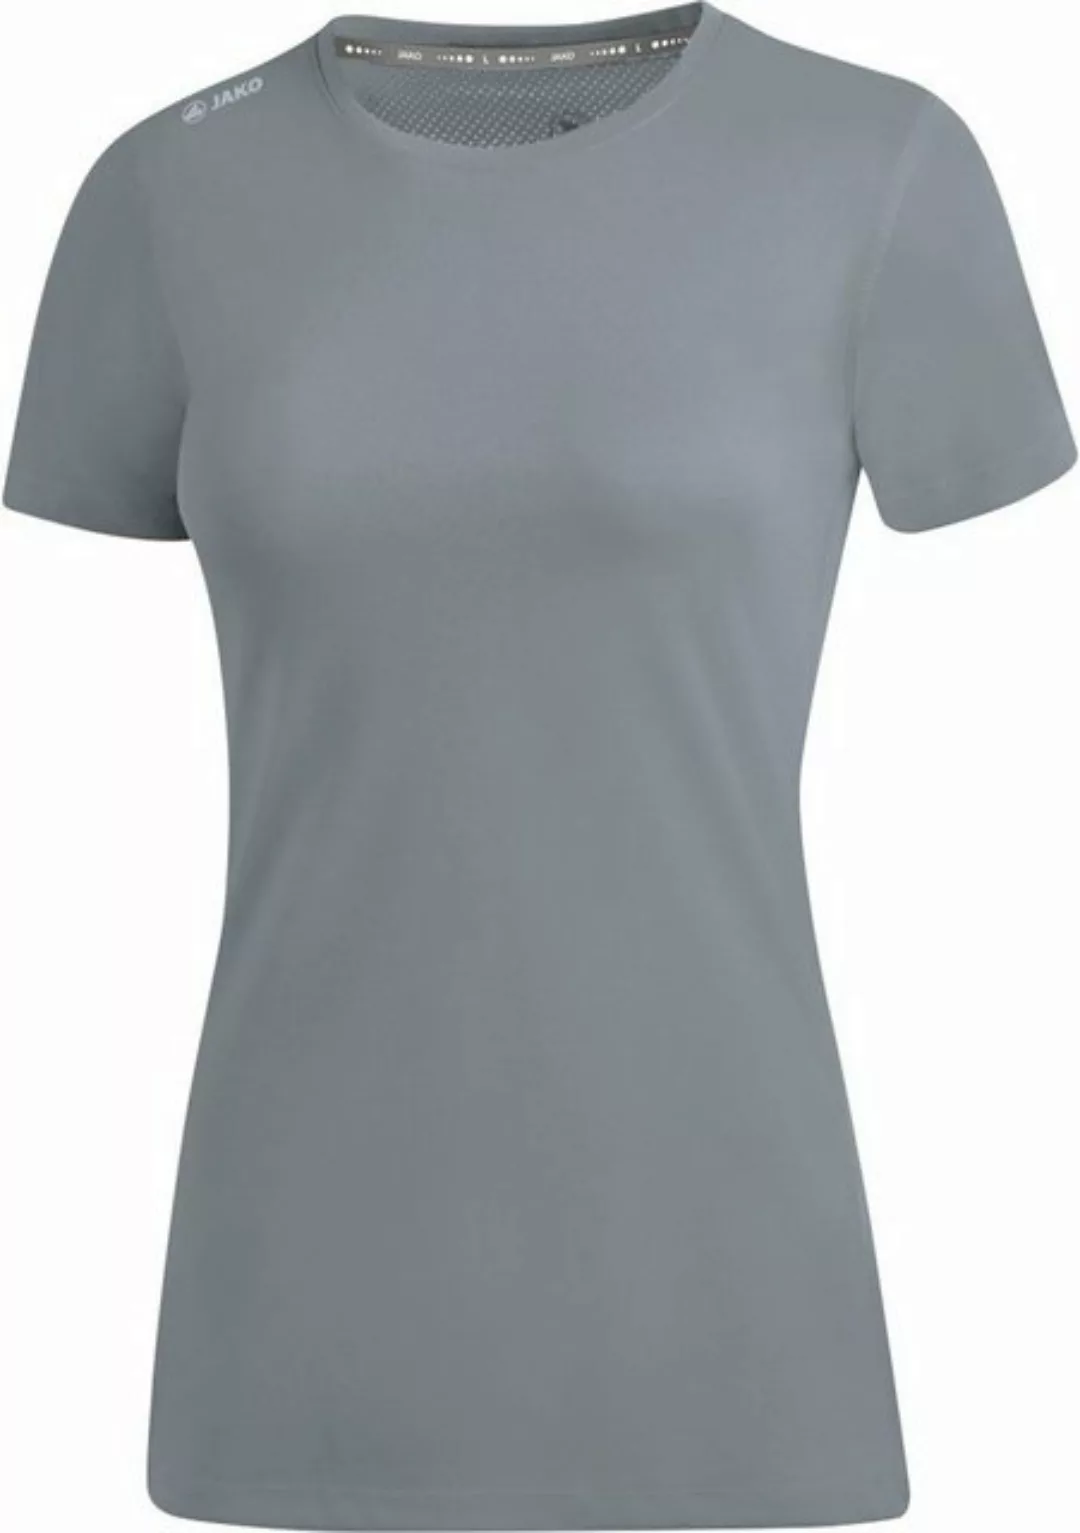 Jako T-Shirt T-Shirt Run 2.0 Damen Laufshirt steingrau/weiß günstig online kaufen